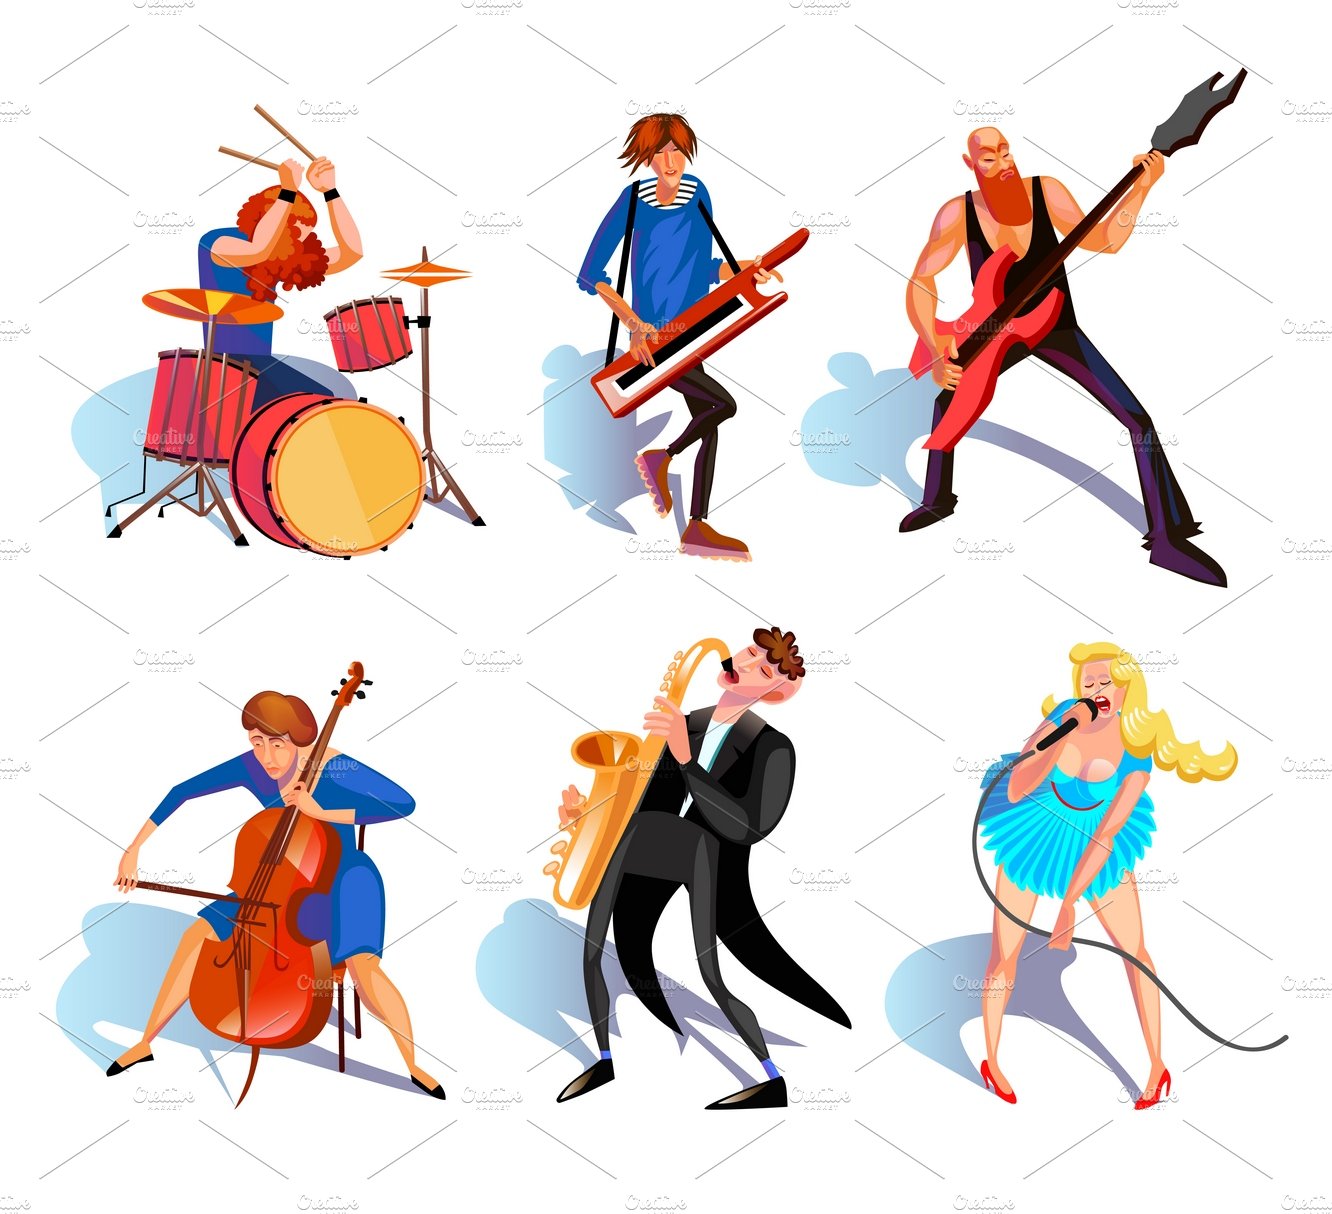 Musicians cartoon set cover image.